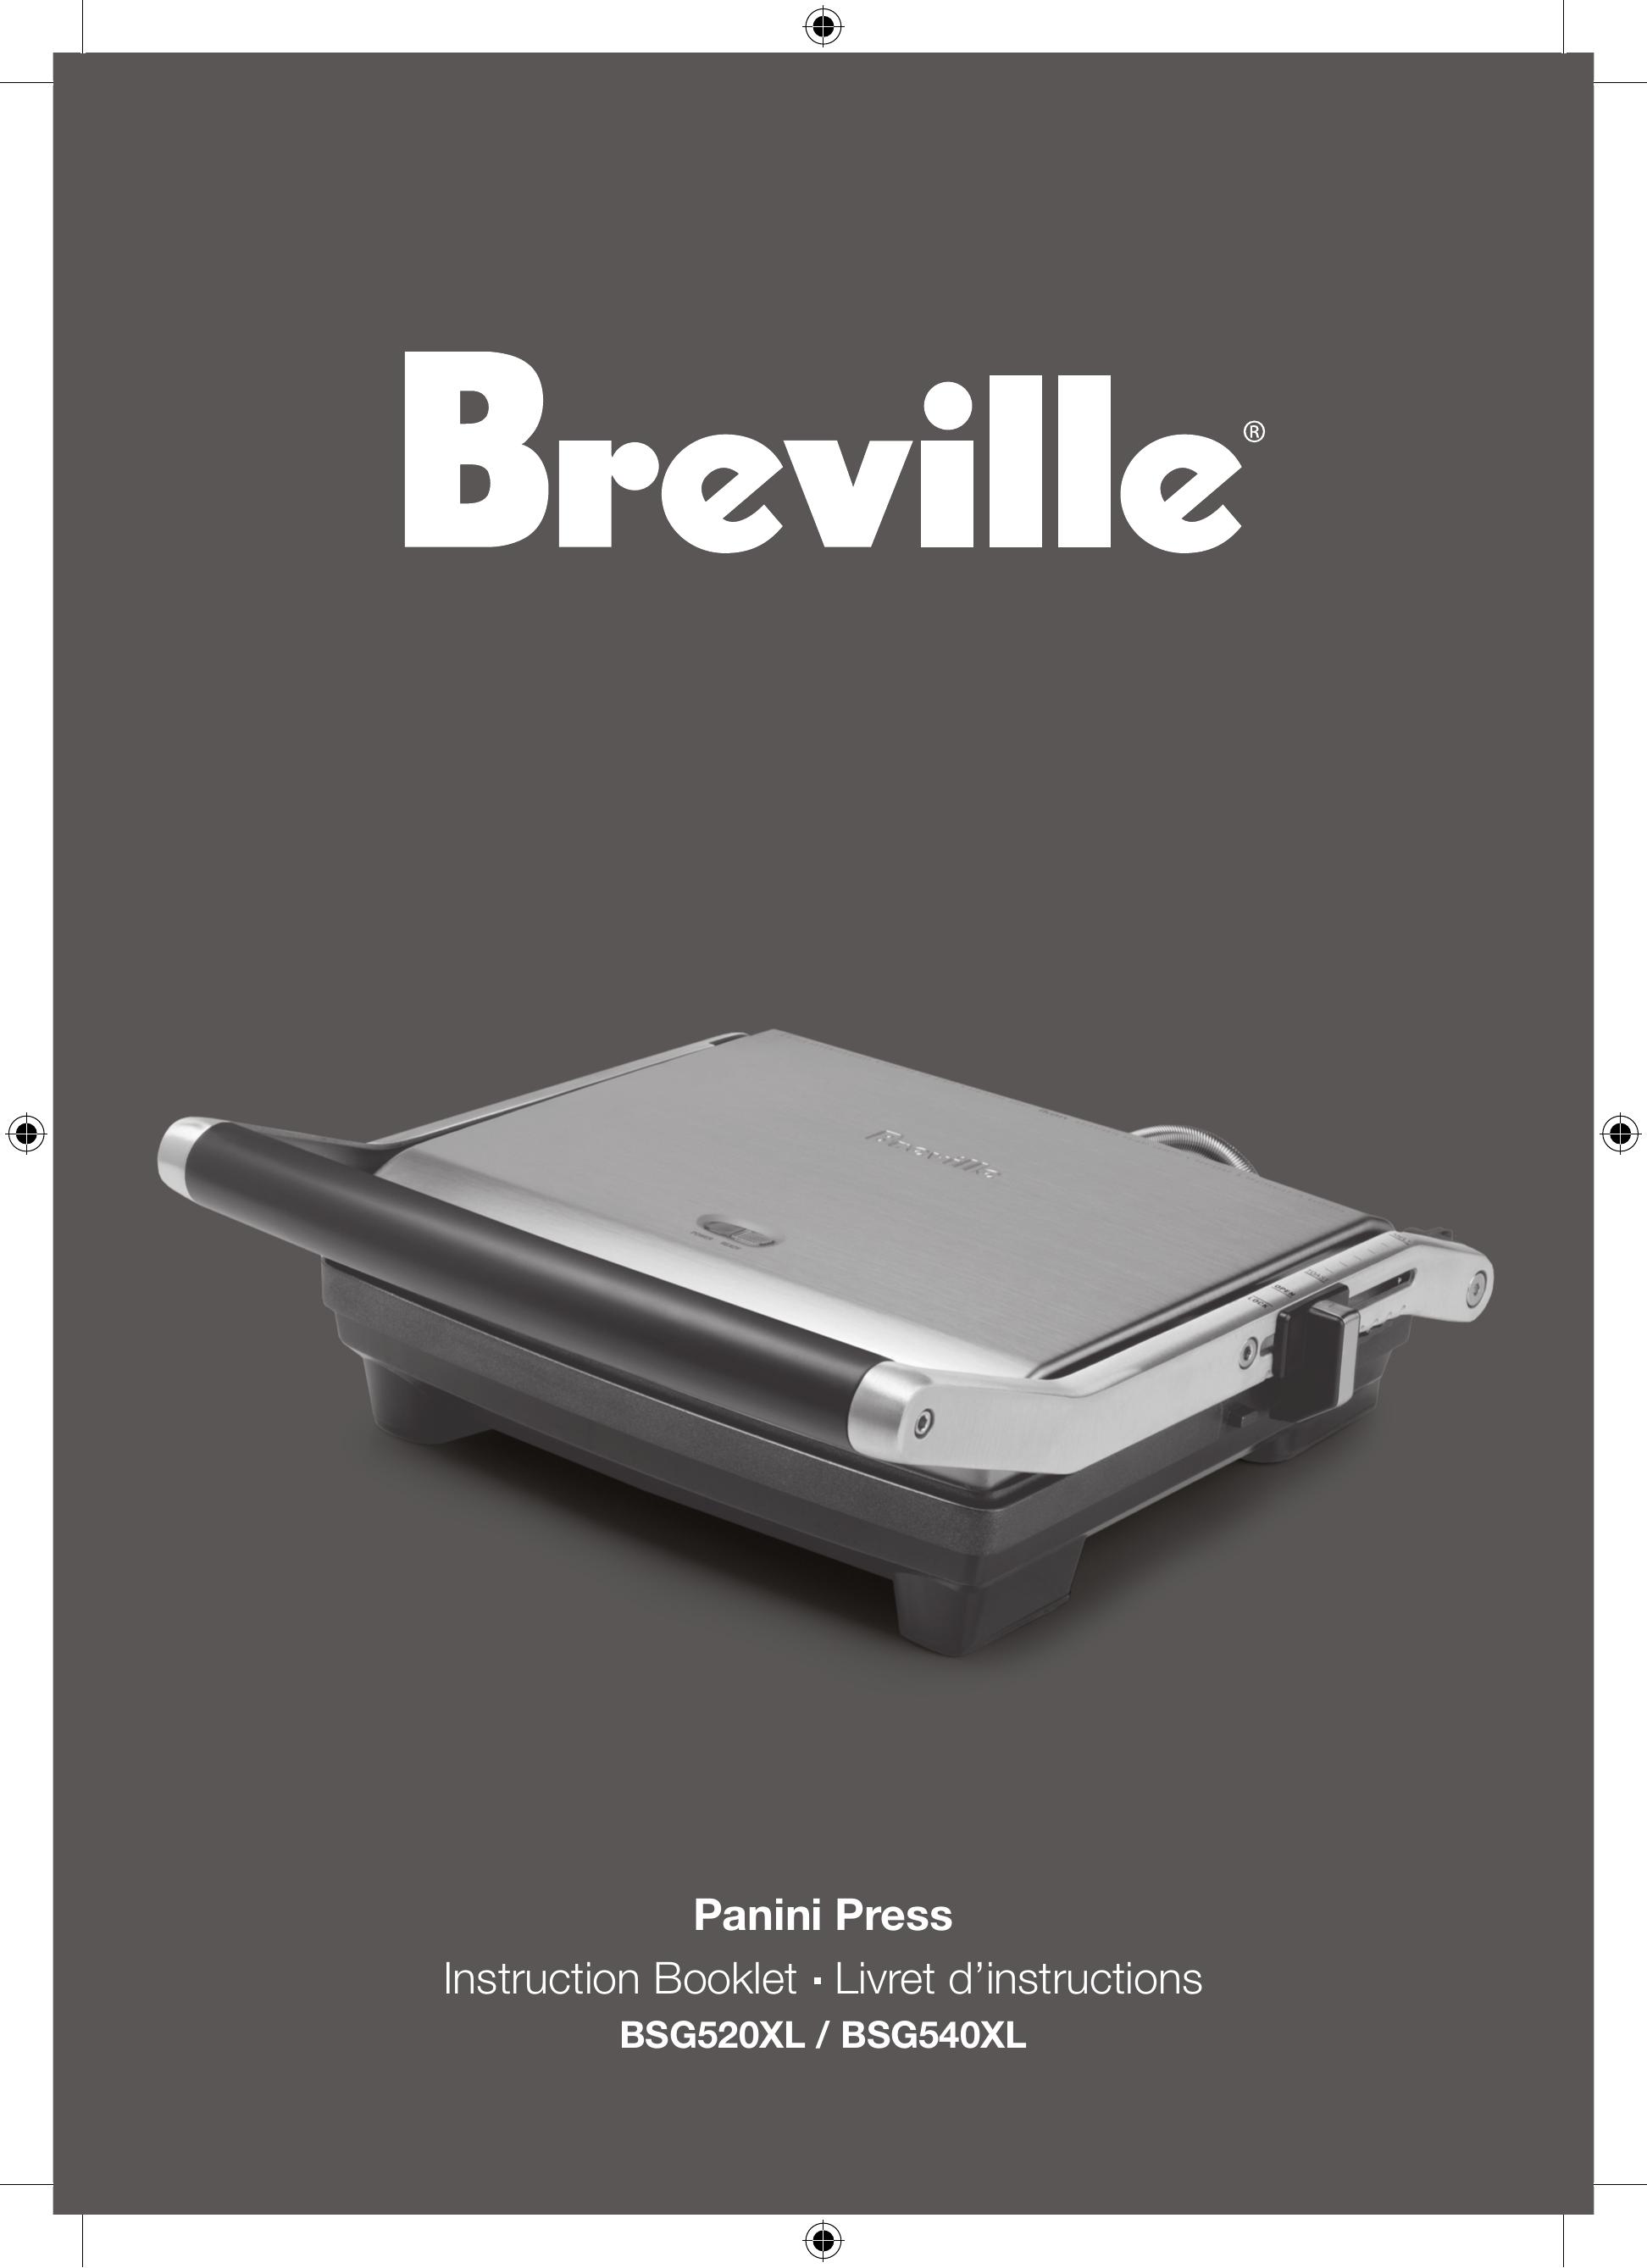 Breville BSG520XL Waffle Iron User Manual